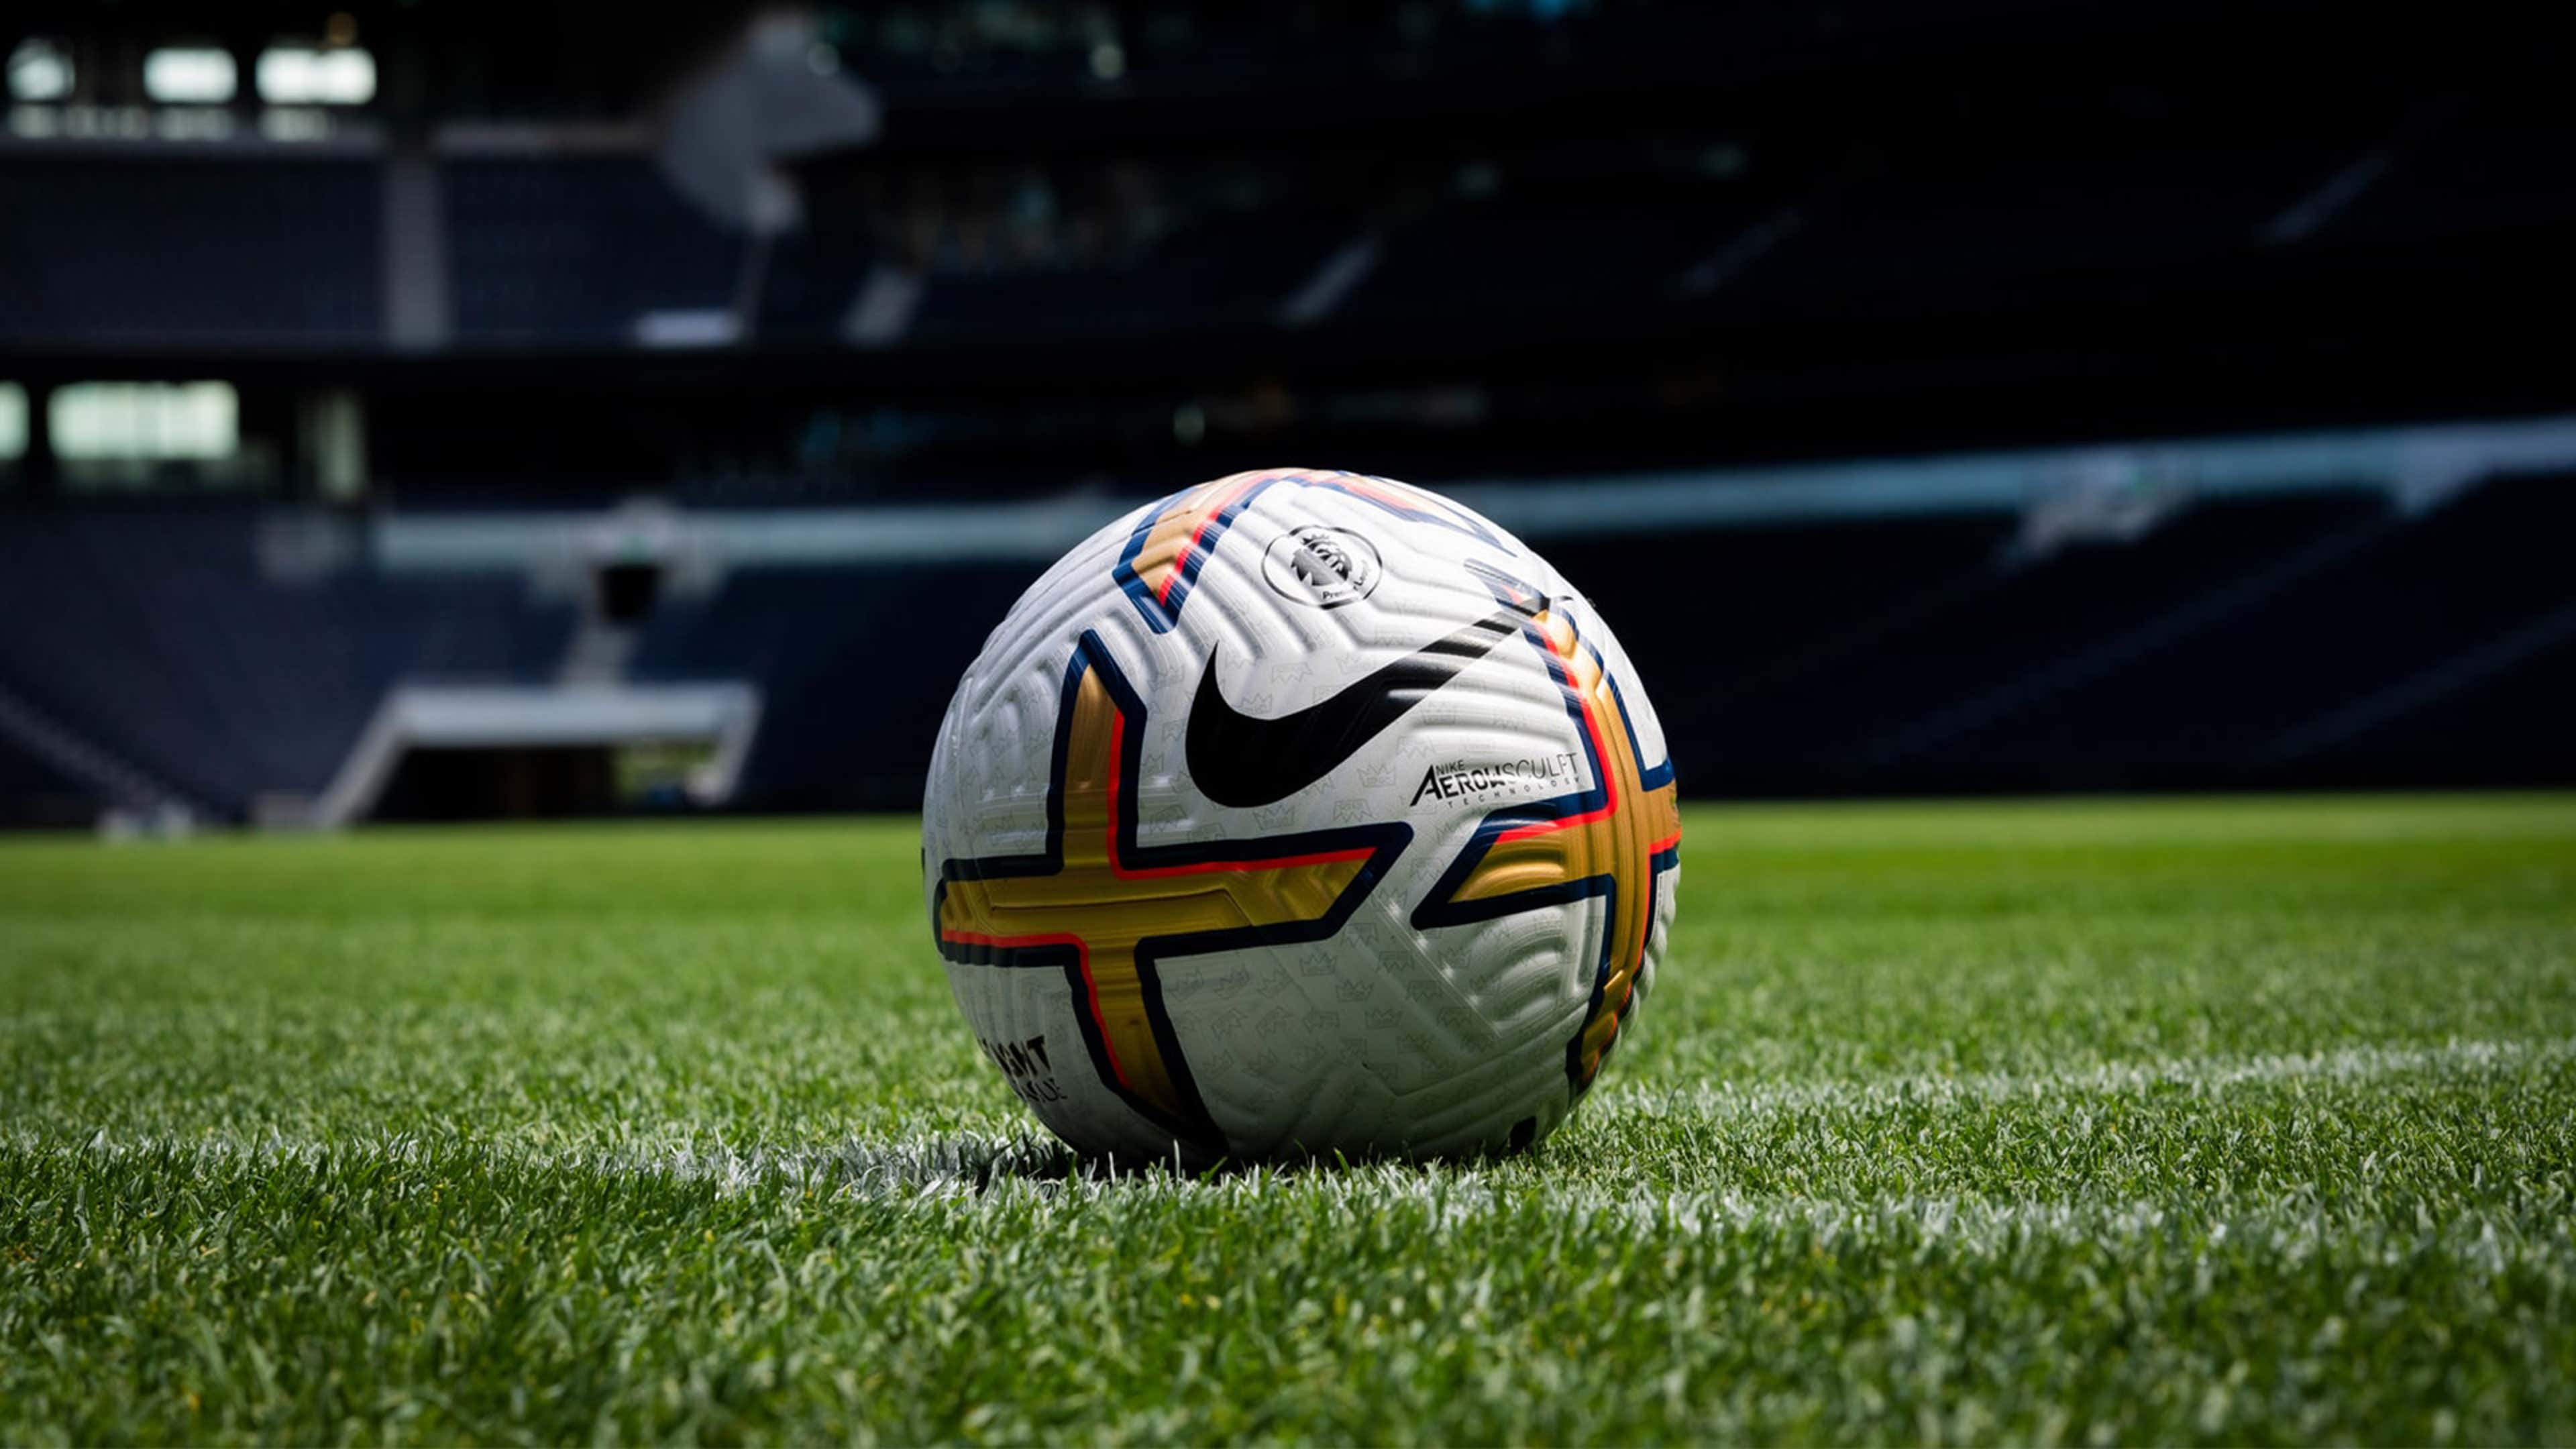 Nike reveal new Premier League match ball for Goal.com US